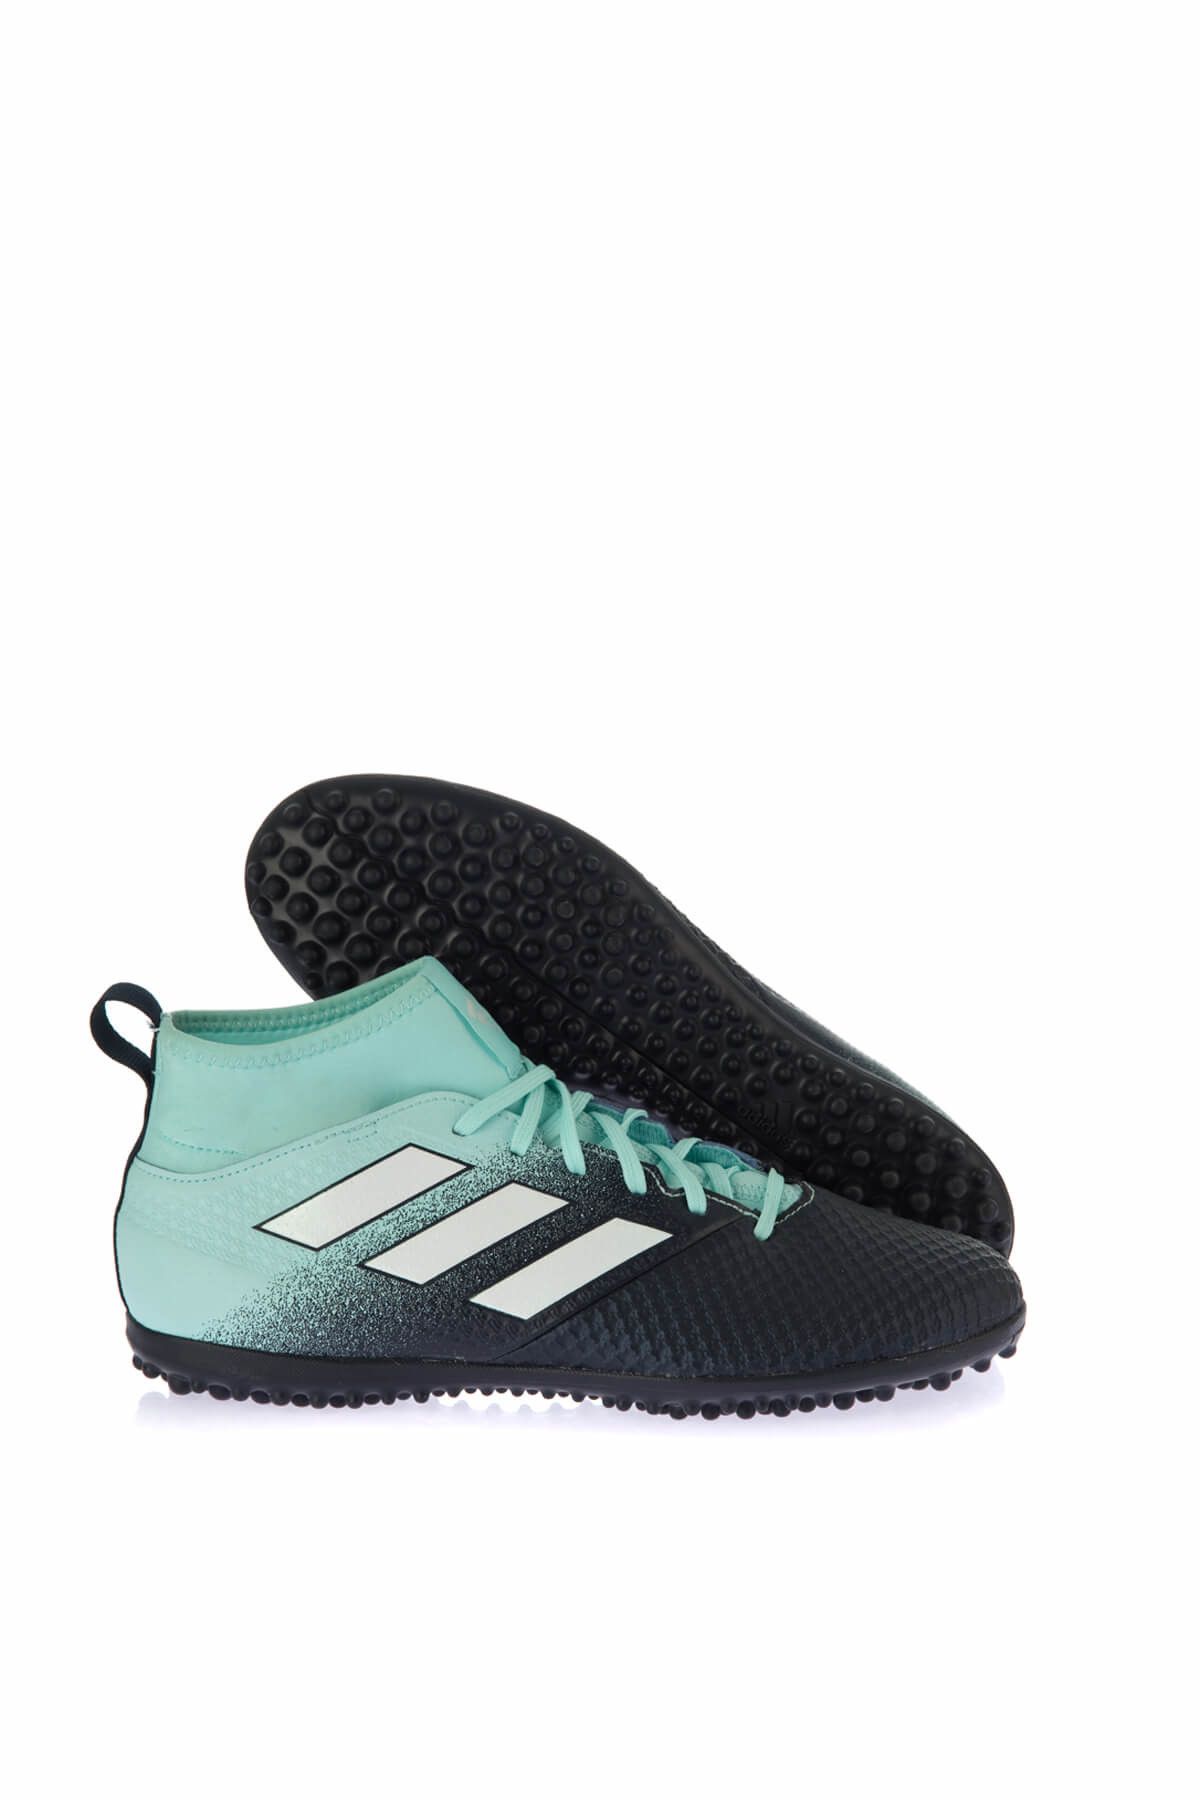 adidas Erkek Futbol Ayakkabı - Ace Tango 17.3 Tf - S77083